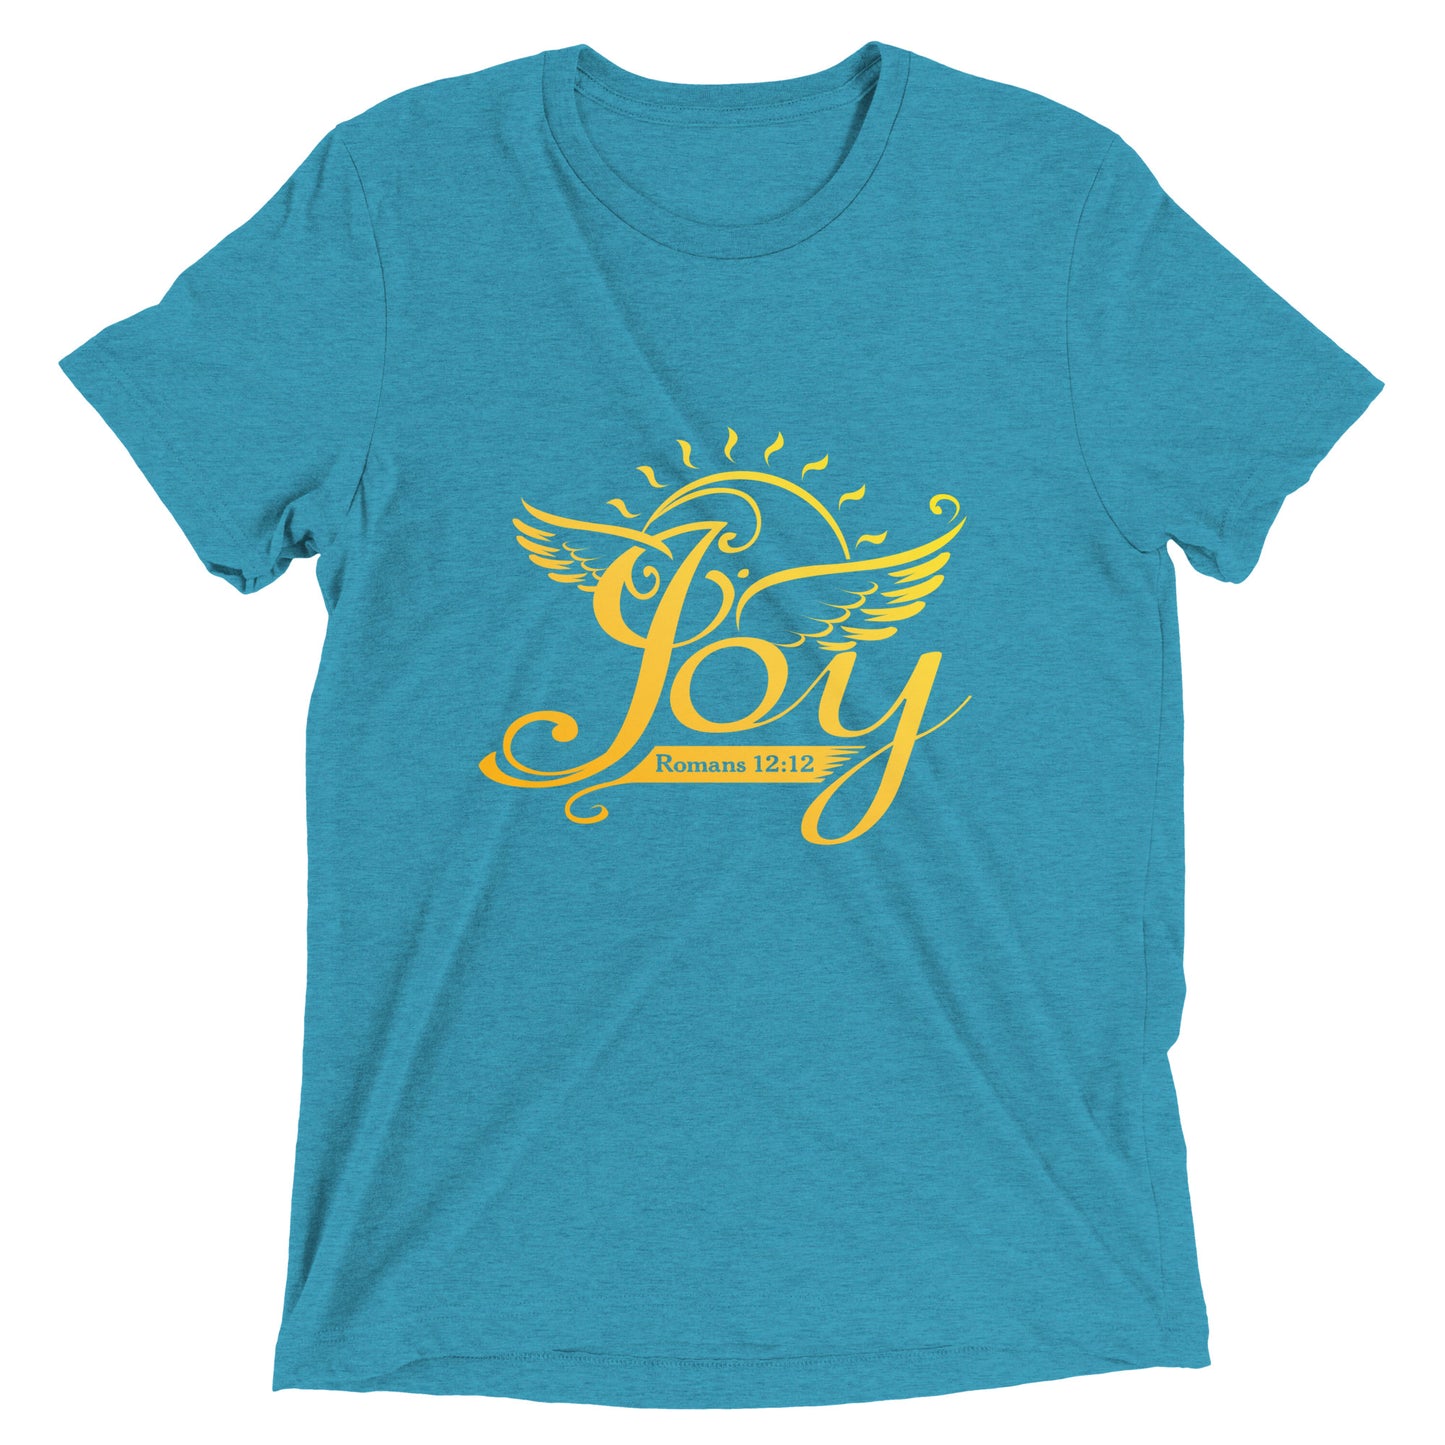 Joy - Short sleeve t-shirt - View All Colors